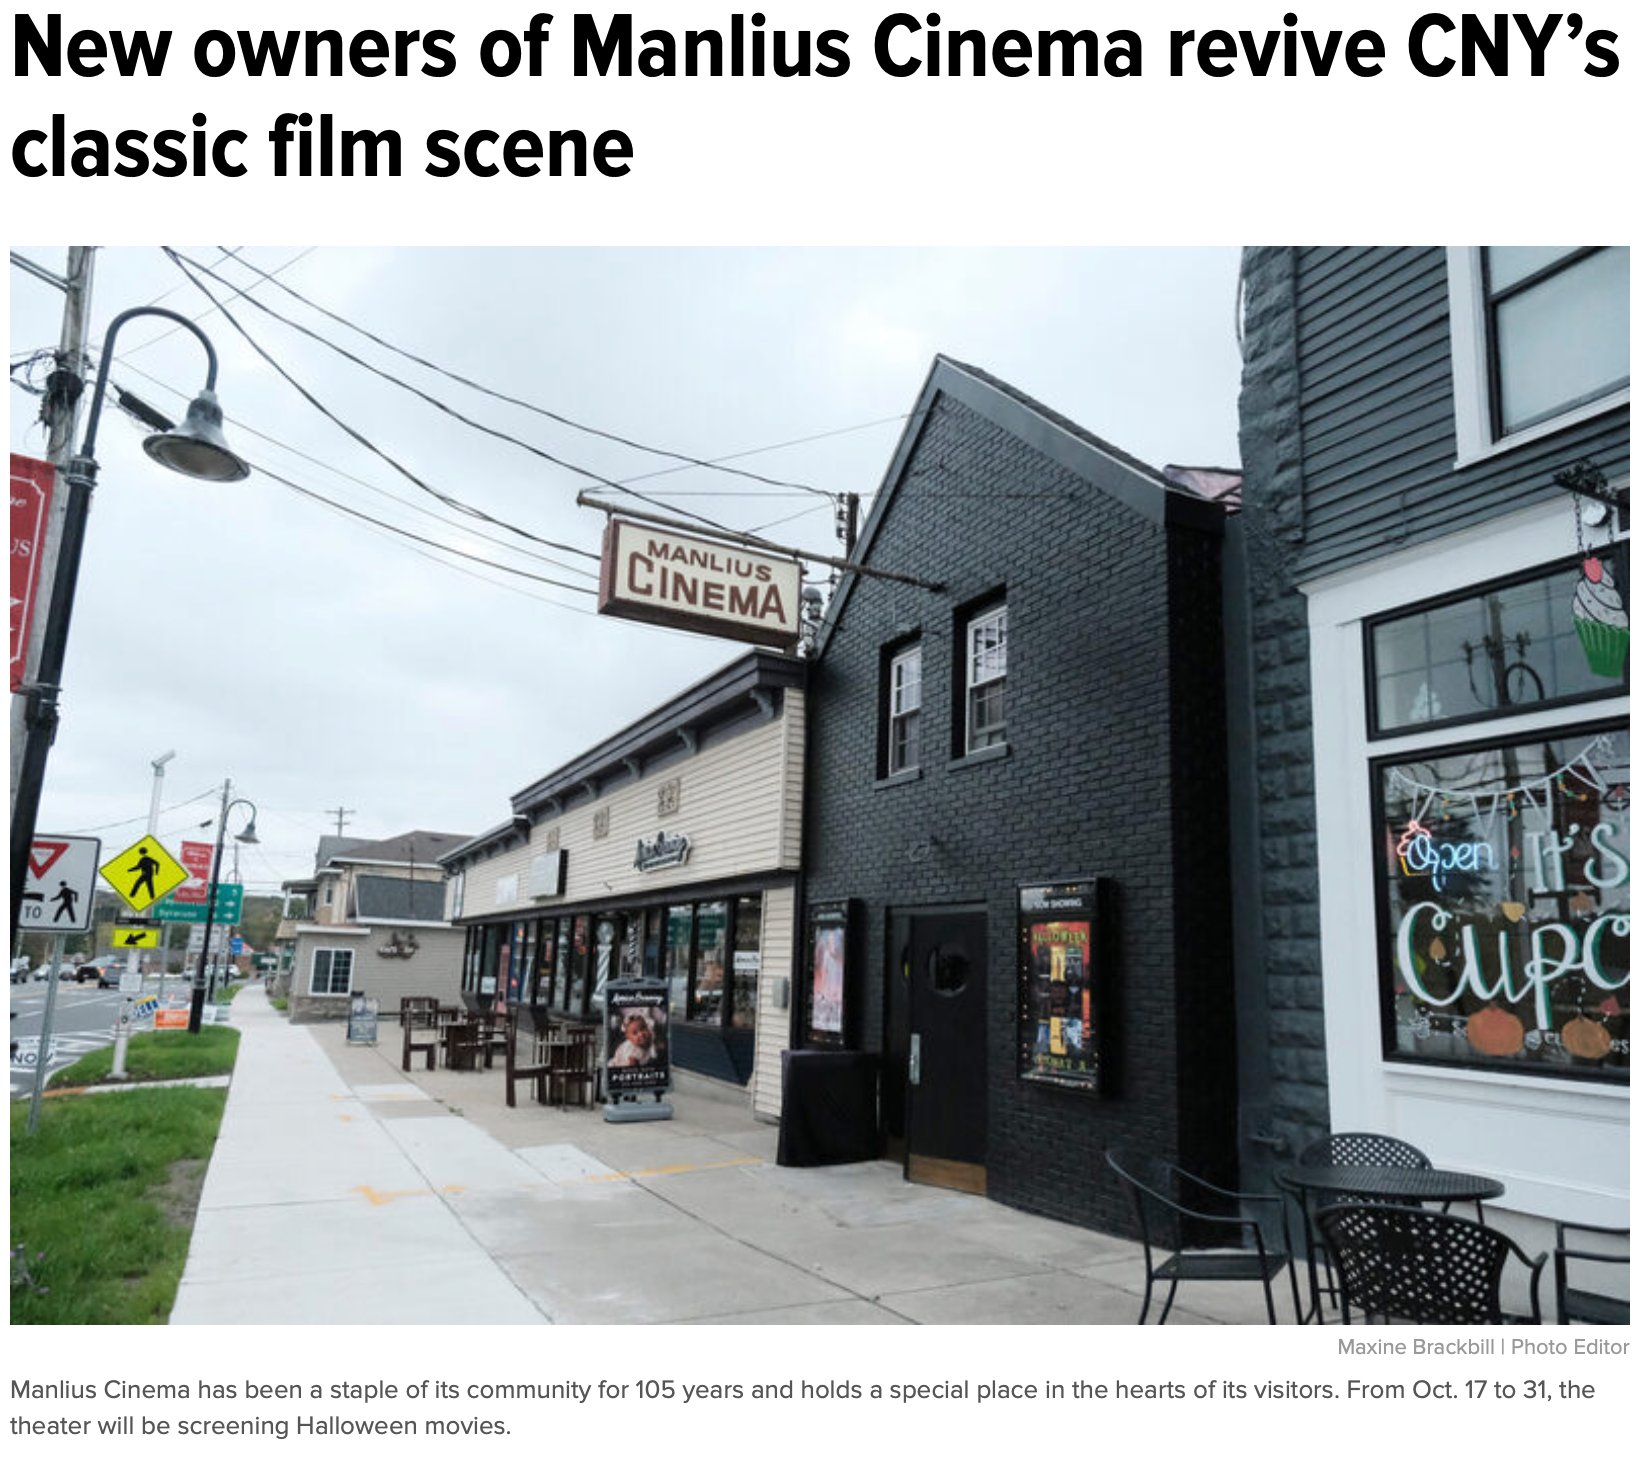 Syracuse University Daily Orange Article about the Manlius Cinema